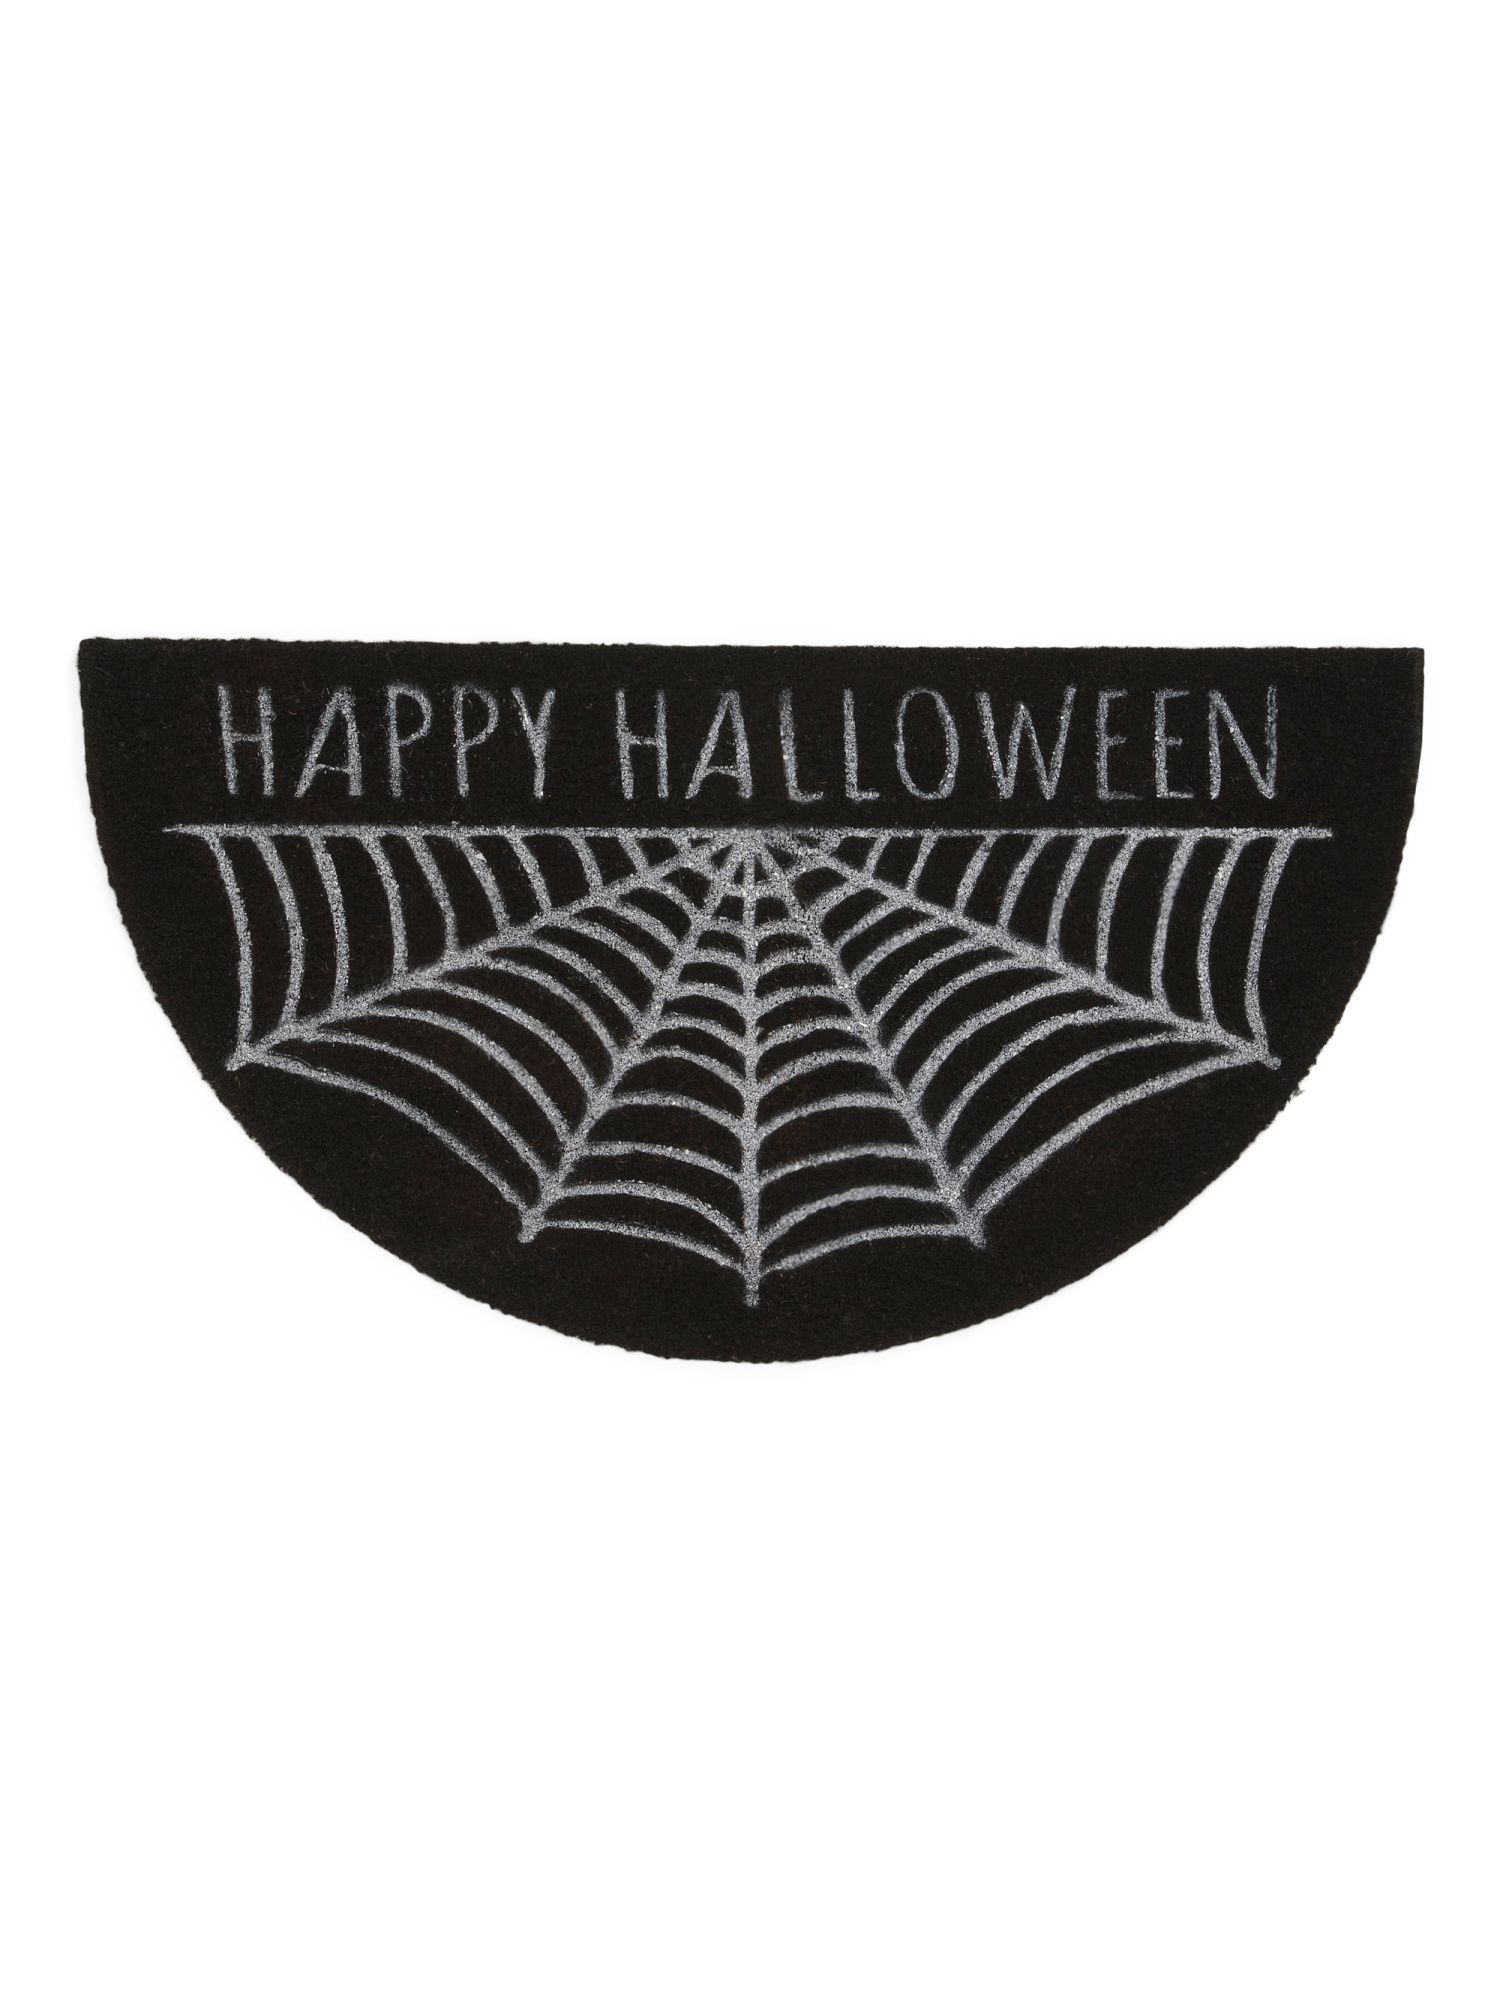 24x45 Happy Halloween Doormat | TJ Maxx